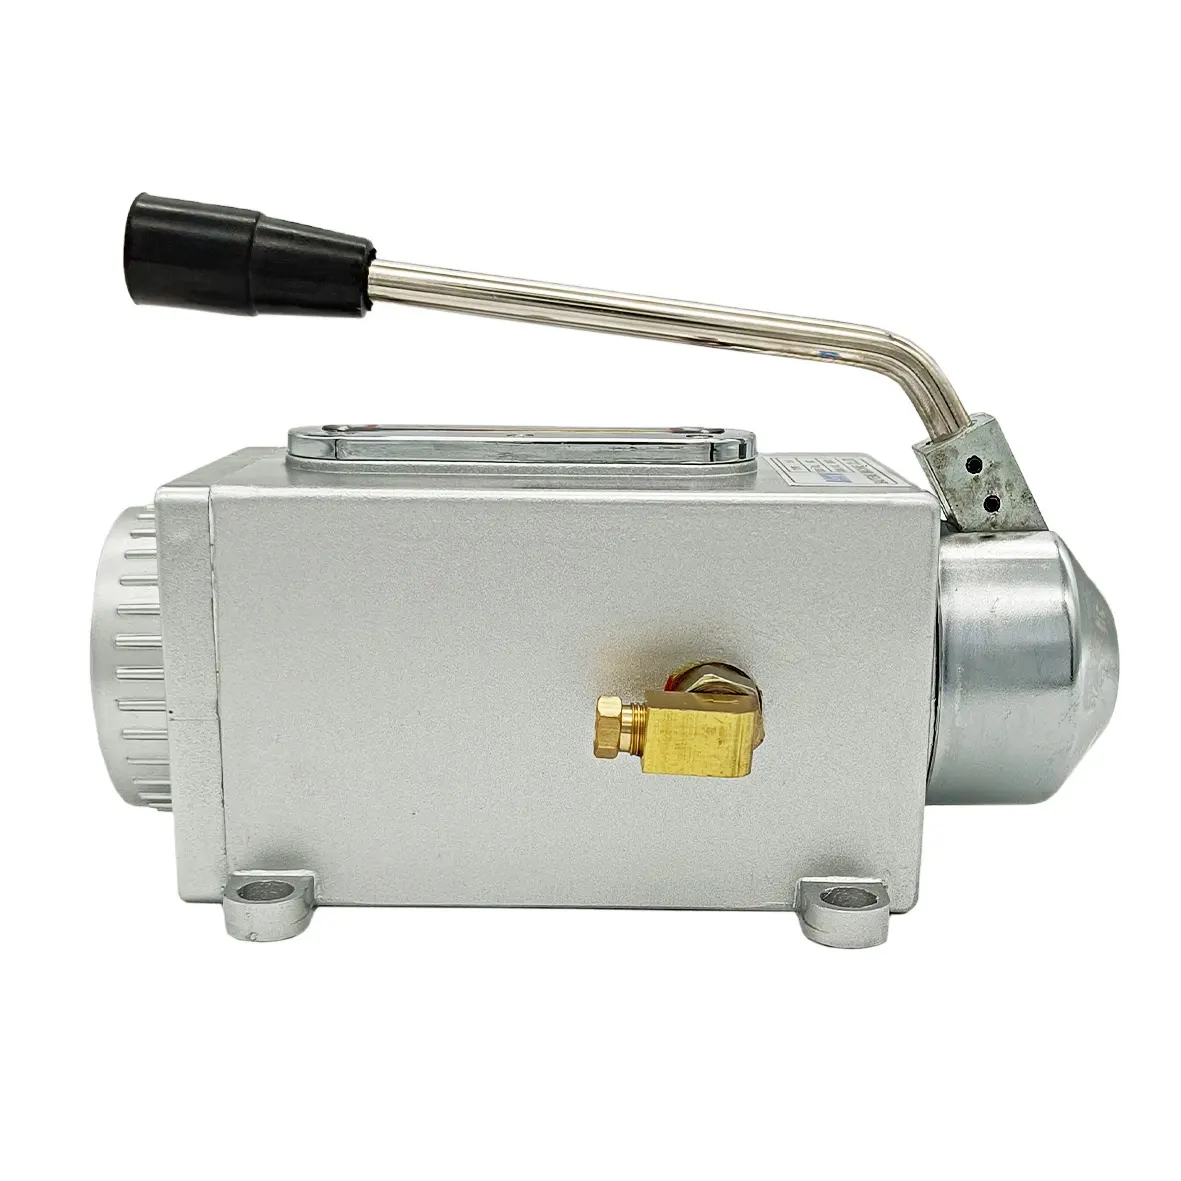 BAOTN-bomba manual de aceite BEC, dispositivo de prevención de flujo trasero para máquina de torno, máquina de trabajo de madera, China